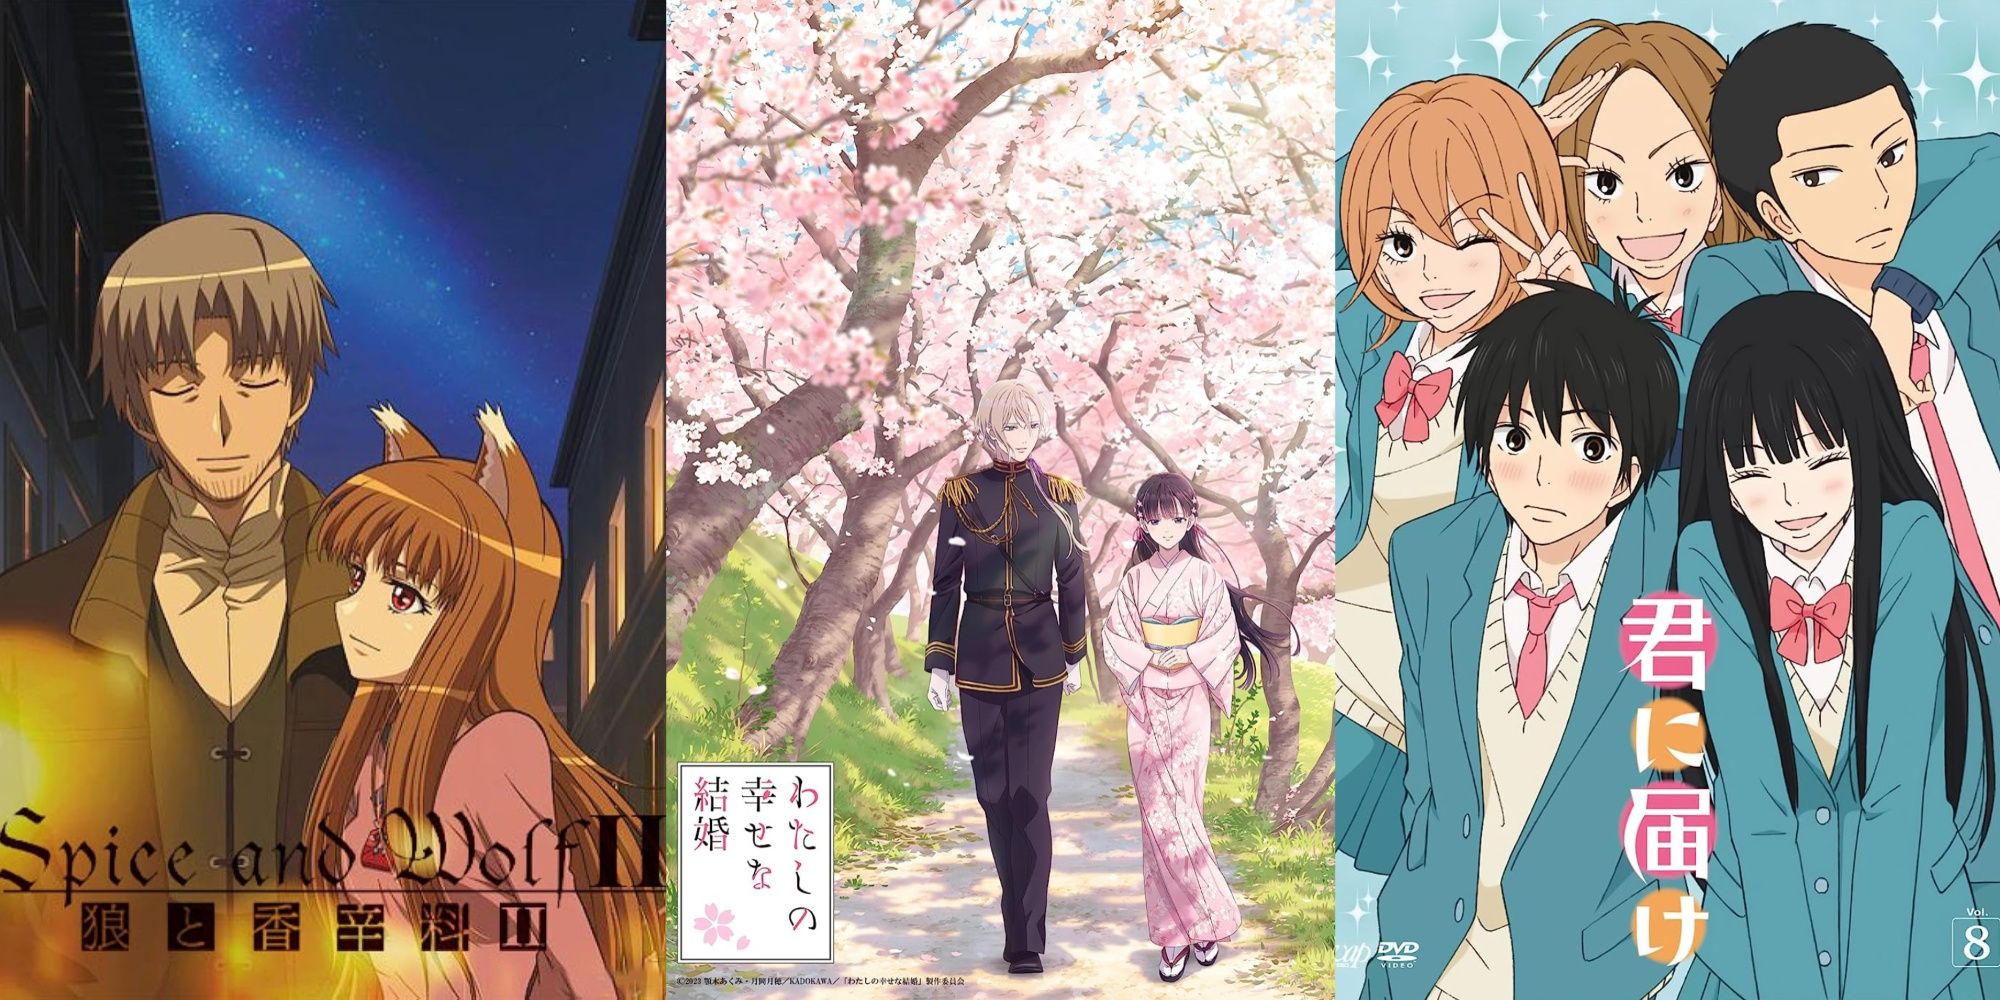 10 Best Romance Anime Of 2020 (According To MyAnimeList)